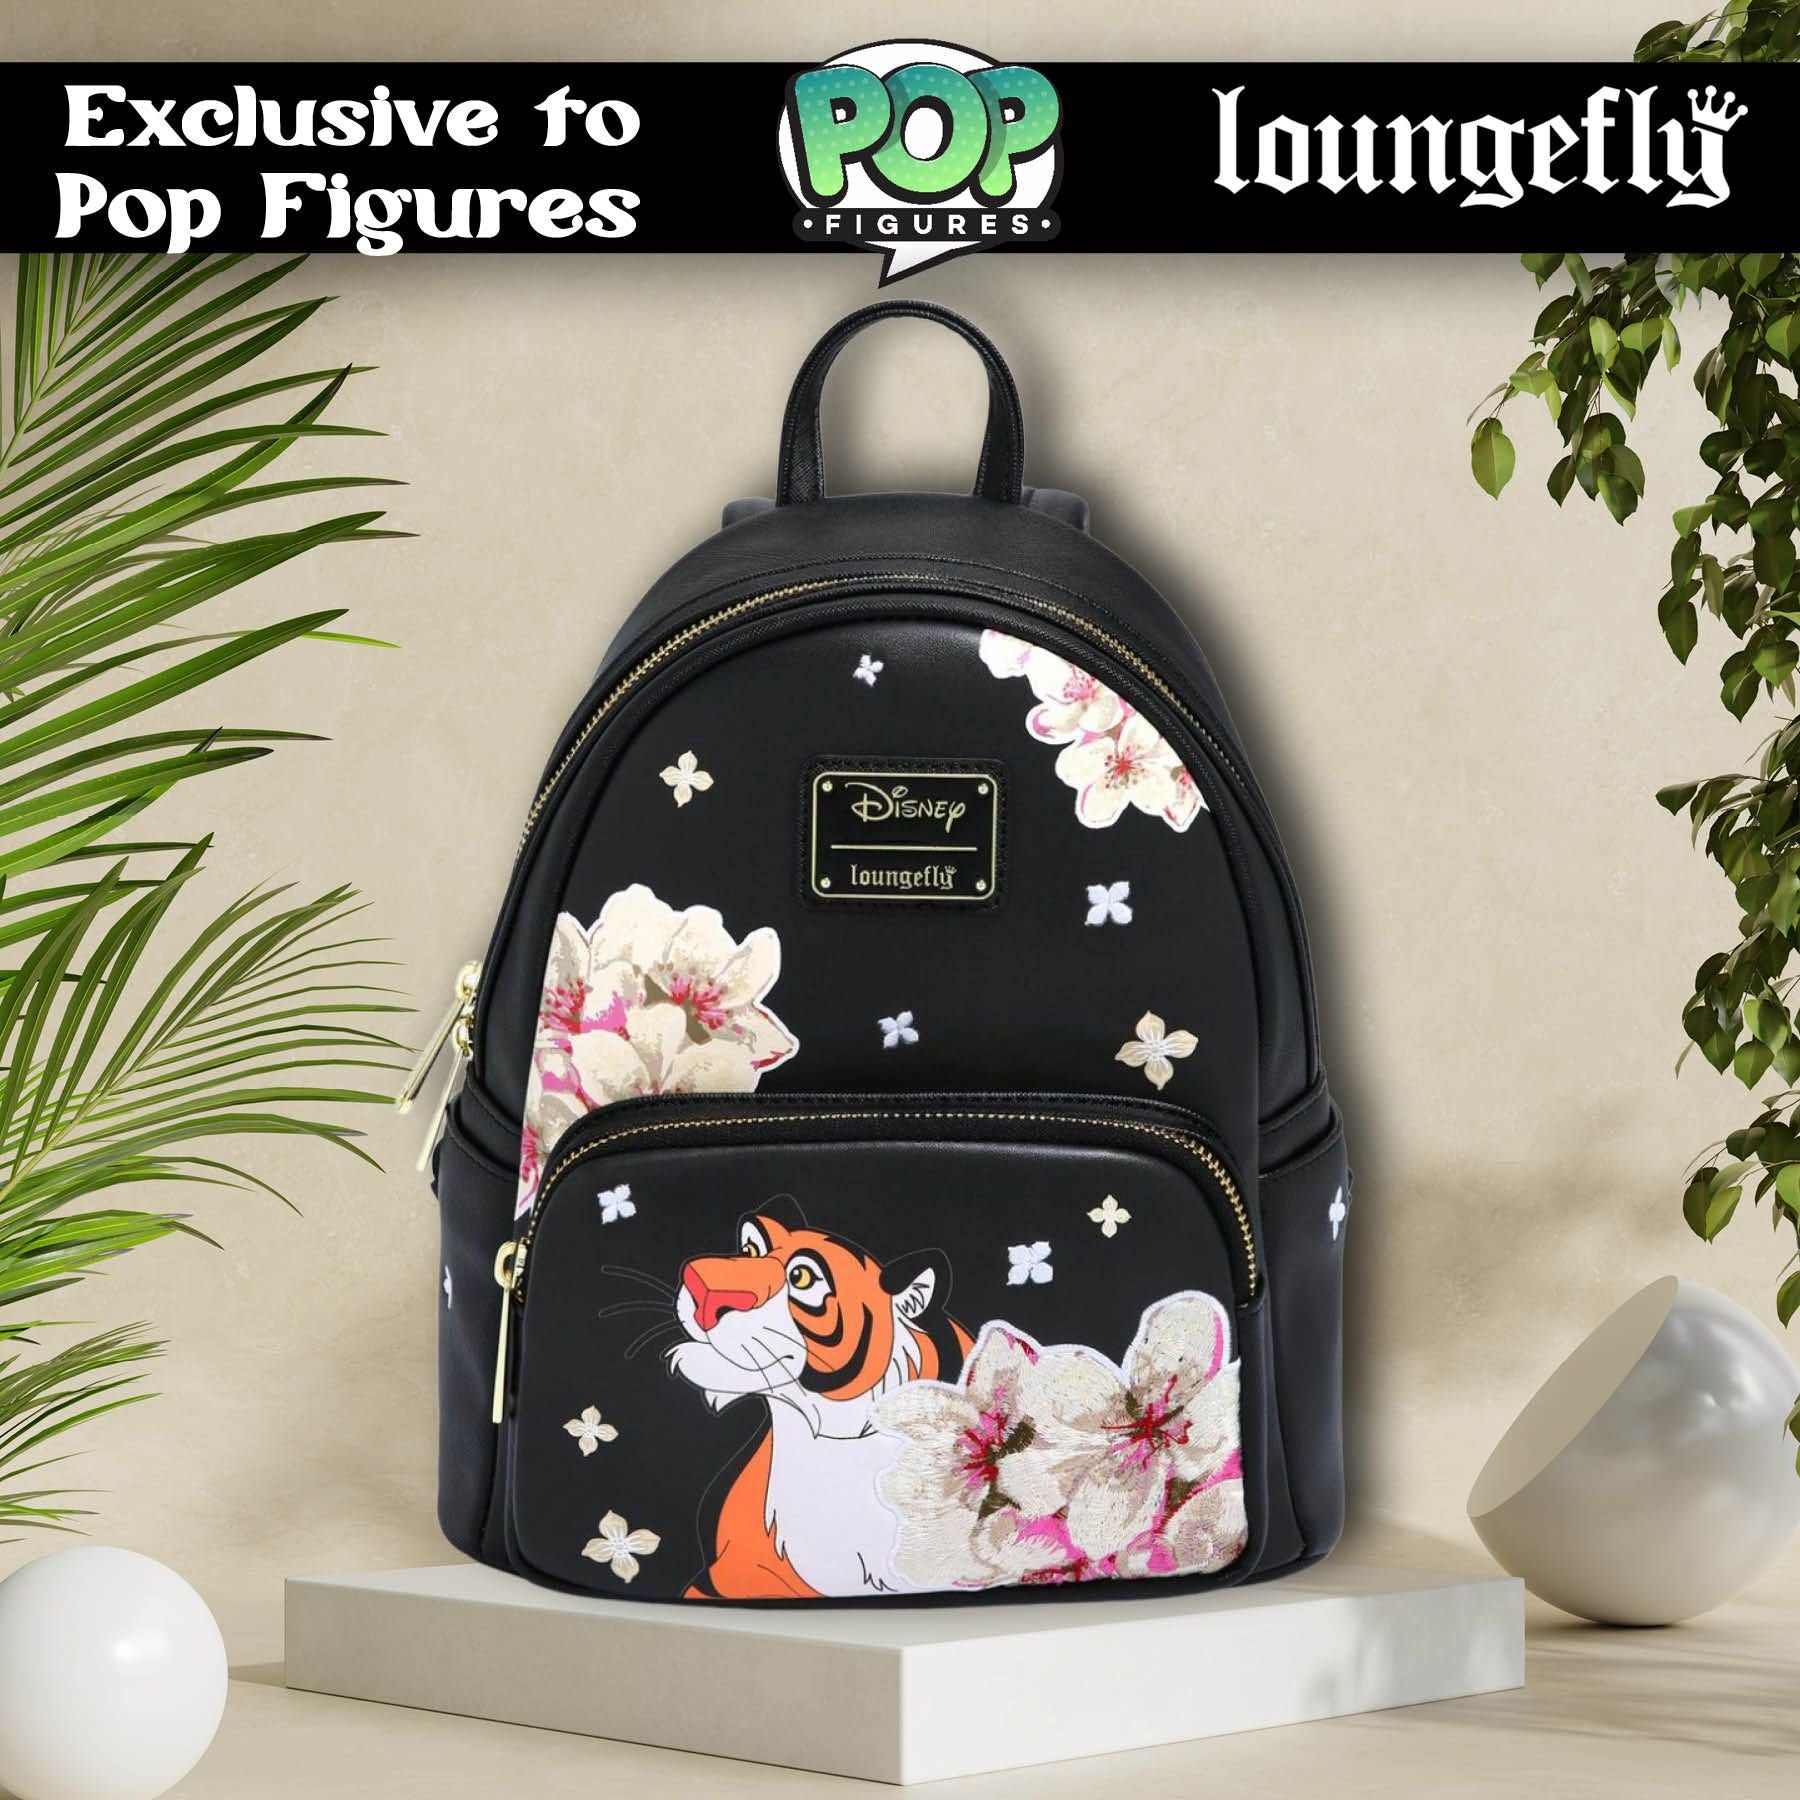 Pop Figures Exclusive - Loungefly Disney Aladdin Rajah Floral Mini Backpack